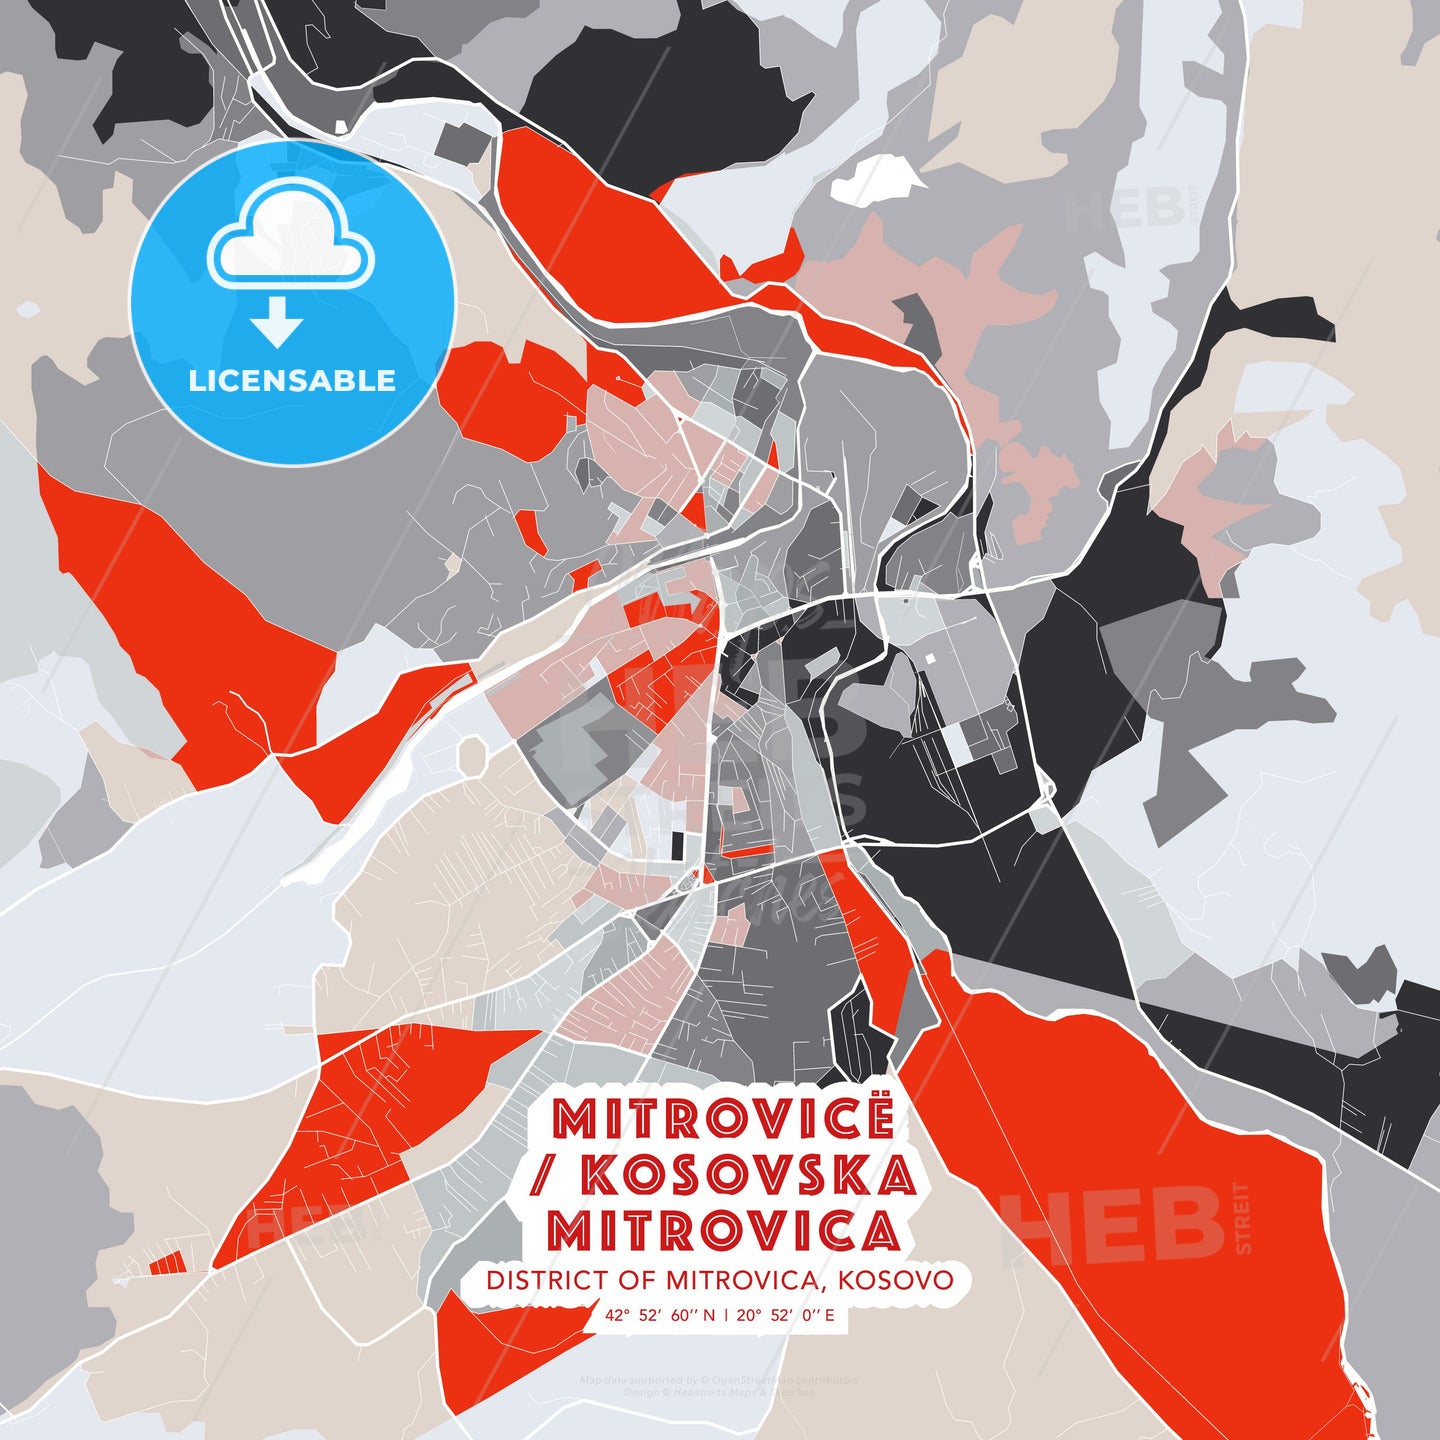 Mitrovicë / Kosovska Mitrovica, District of Mitrovica, Kosovo, modern map - HEBSTREITS Sketches